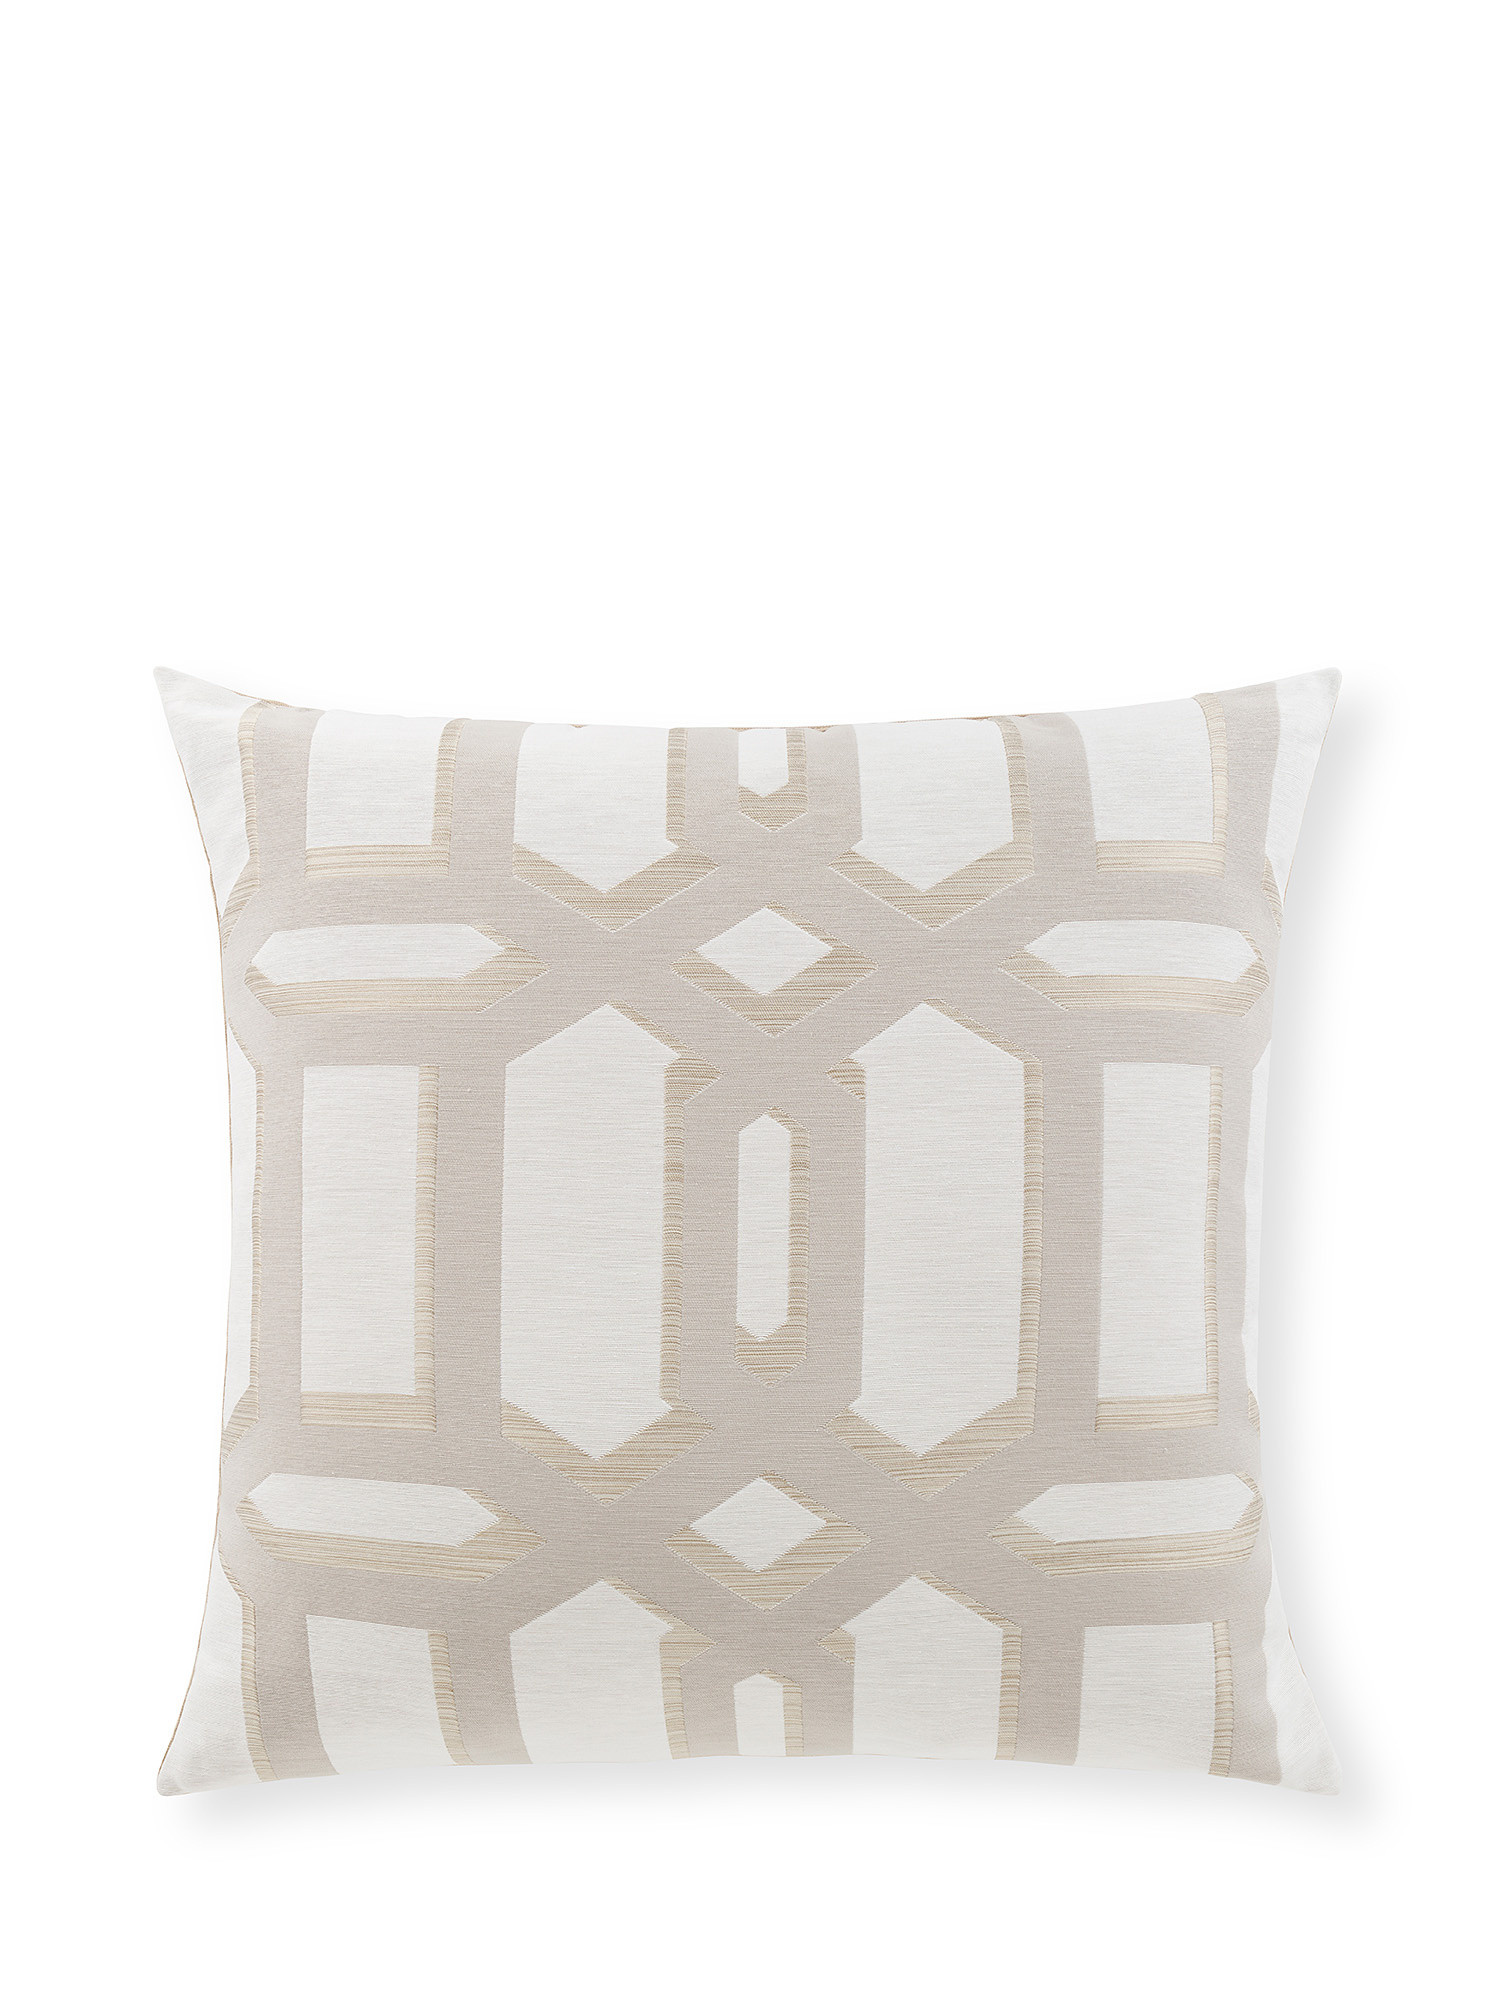 Jacquard cushion with geometric motif 50x50cm, Beige, large image number 0